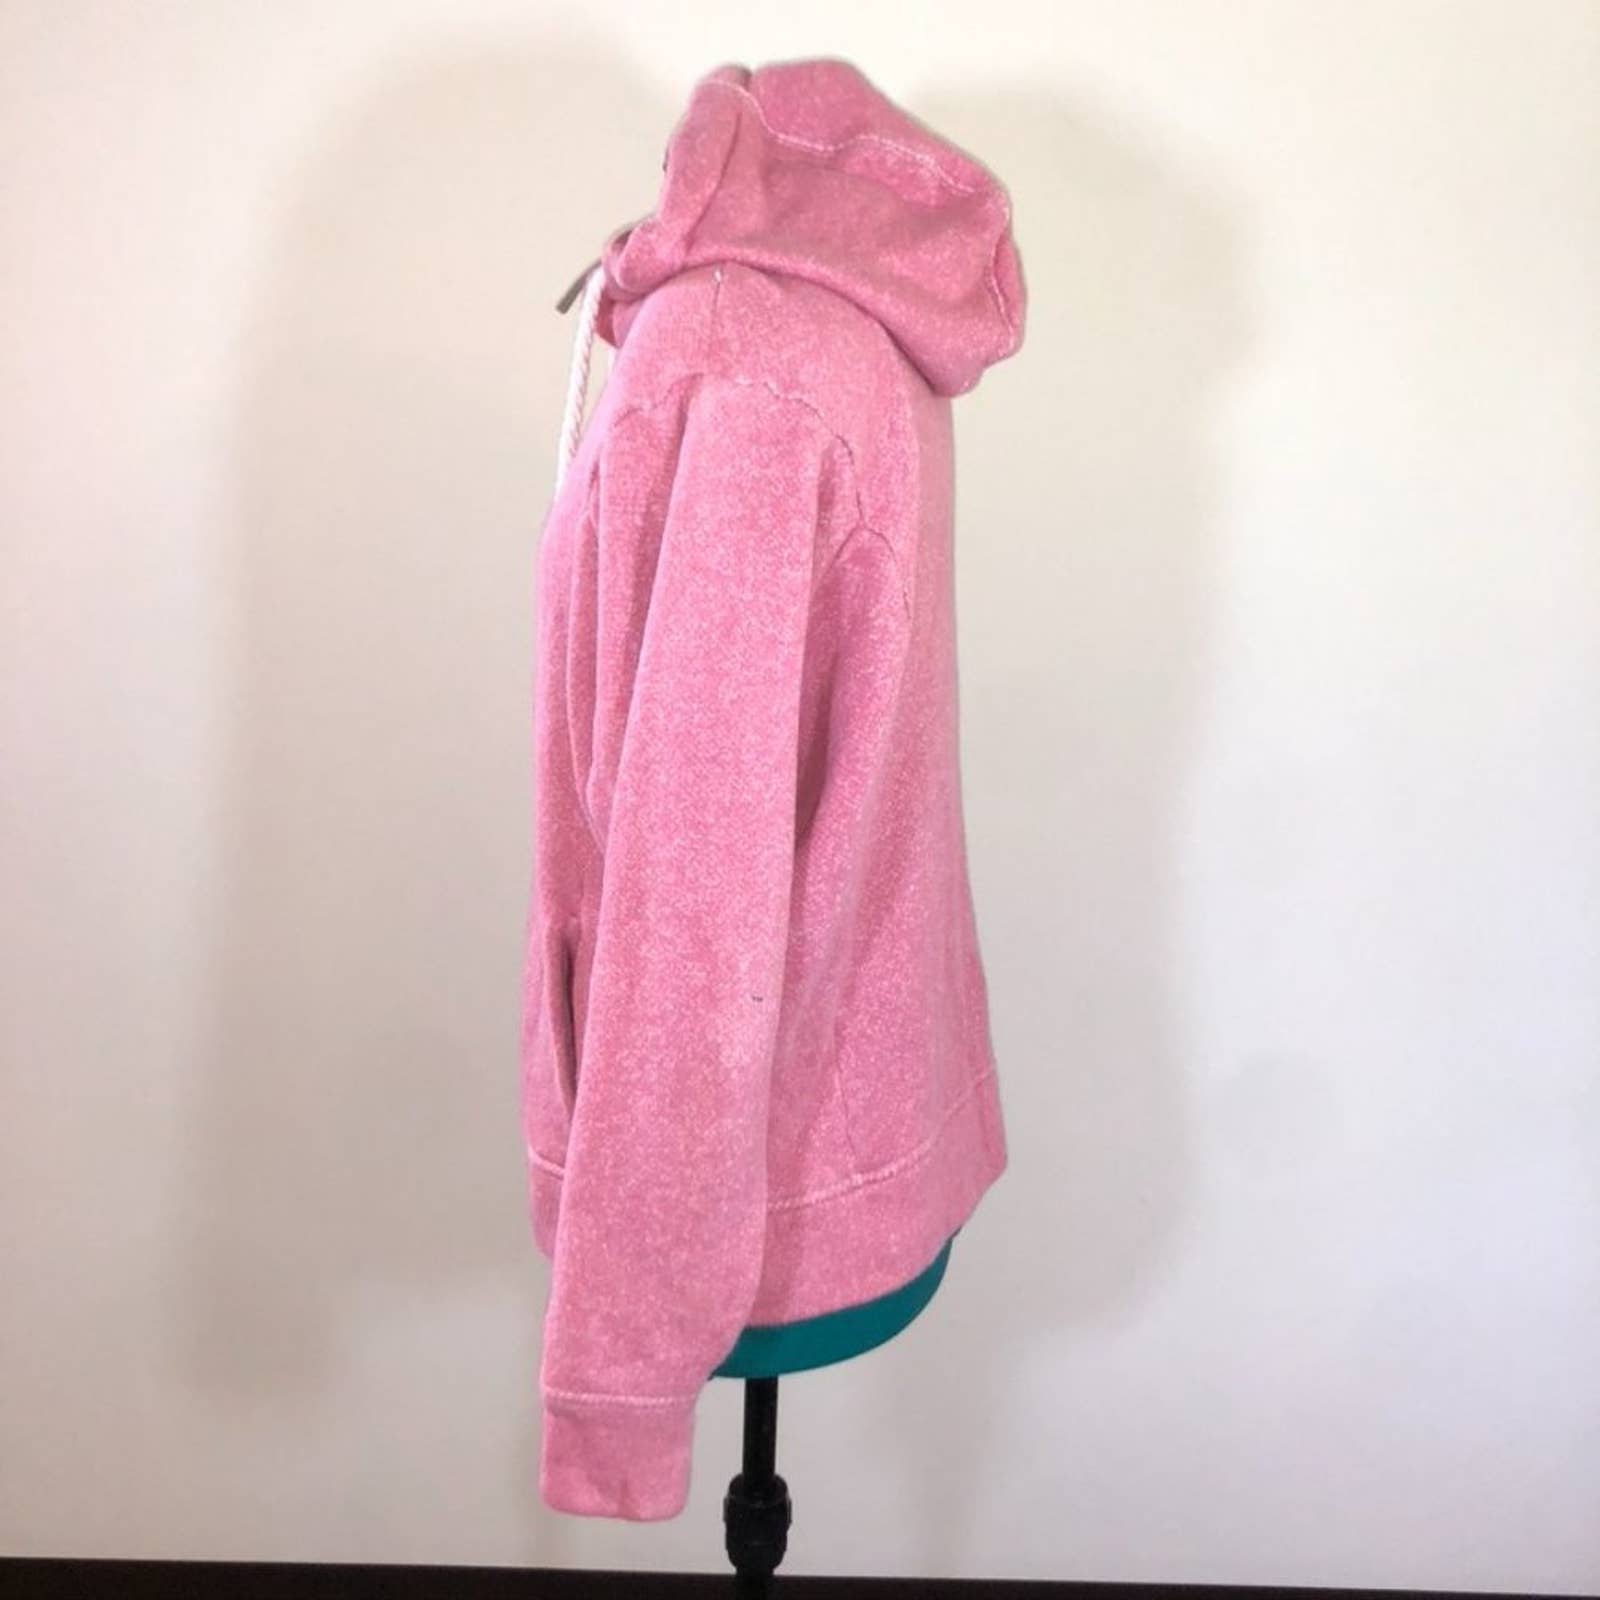 Bench Pink Hoody - Size 4Markita's ClosetBench